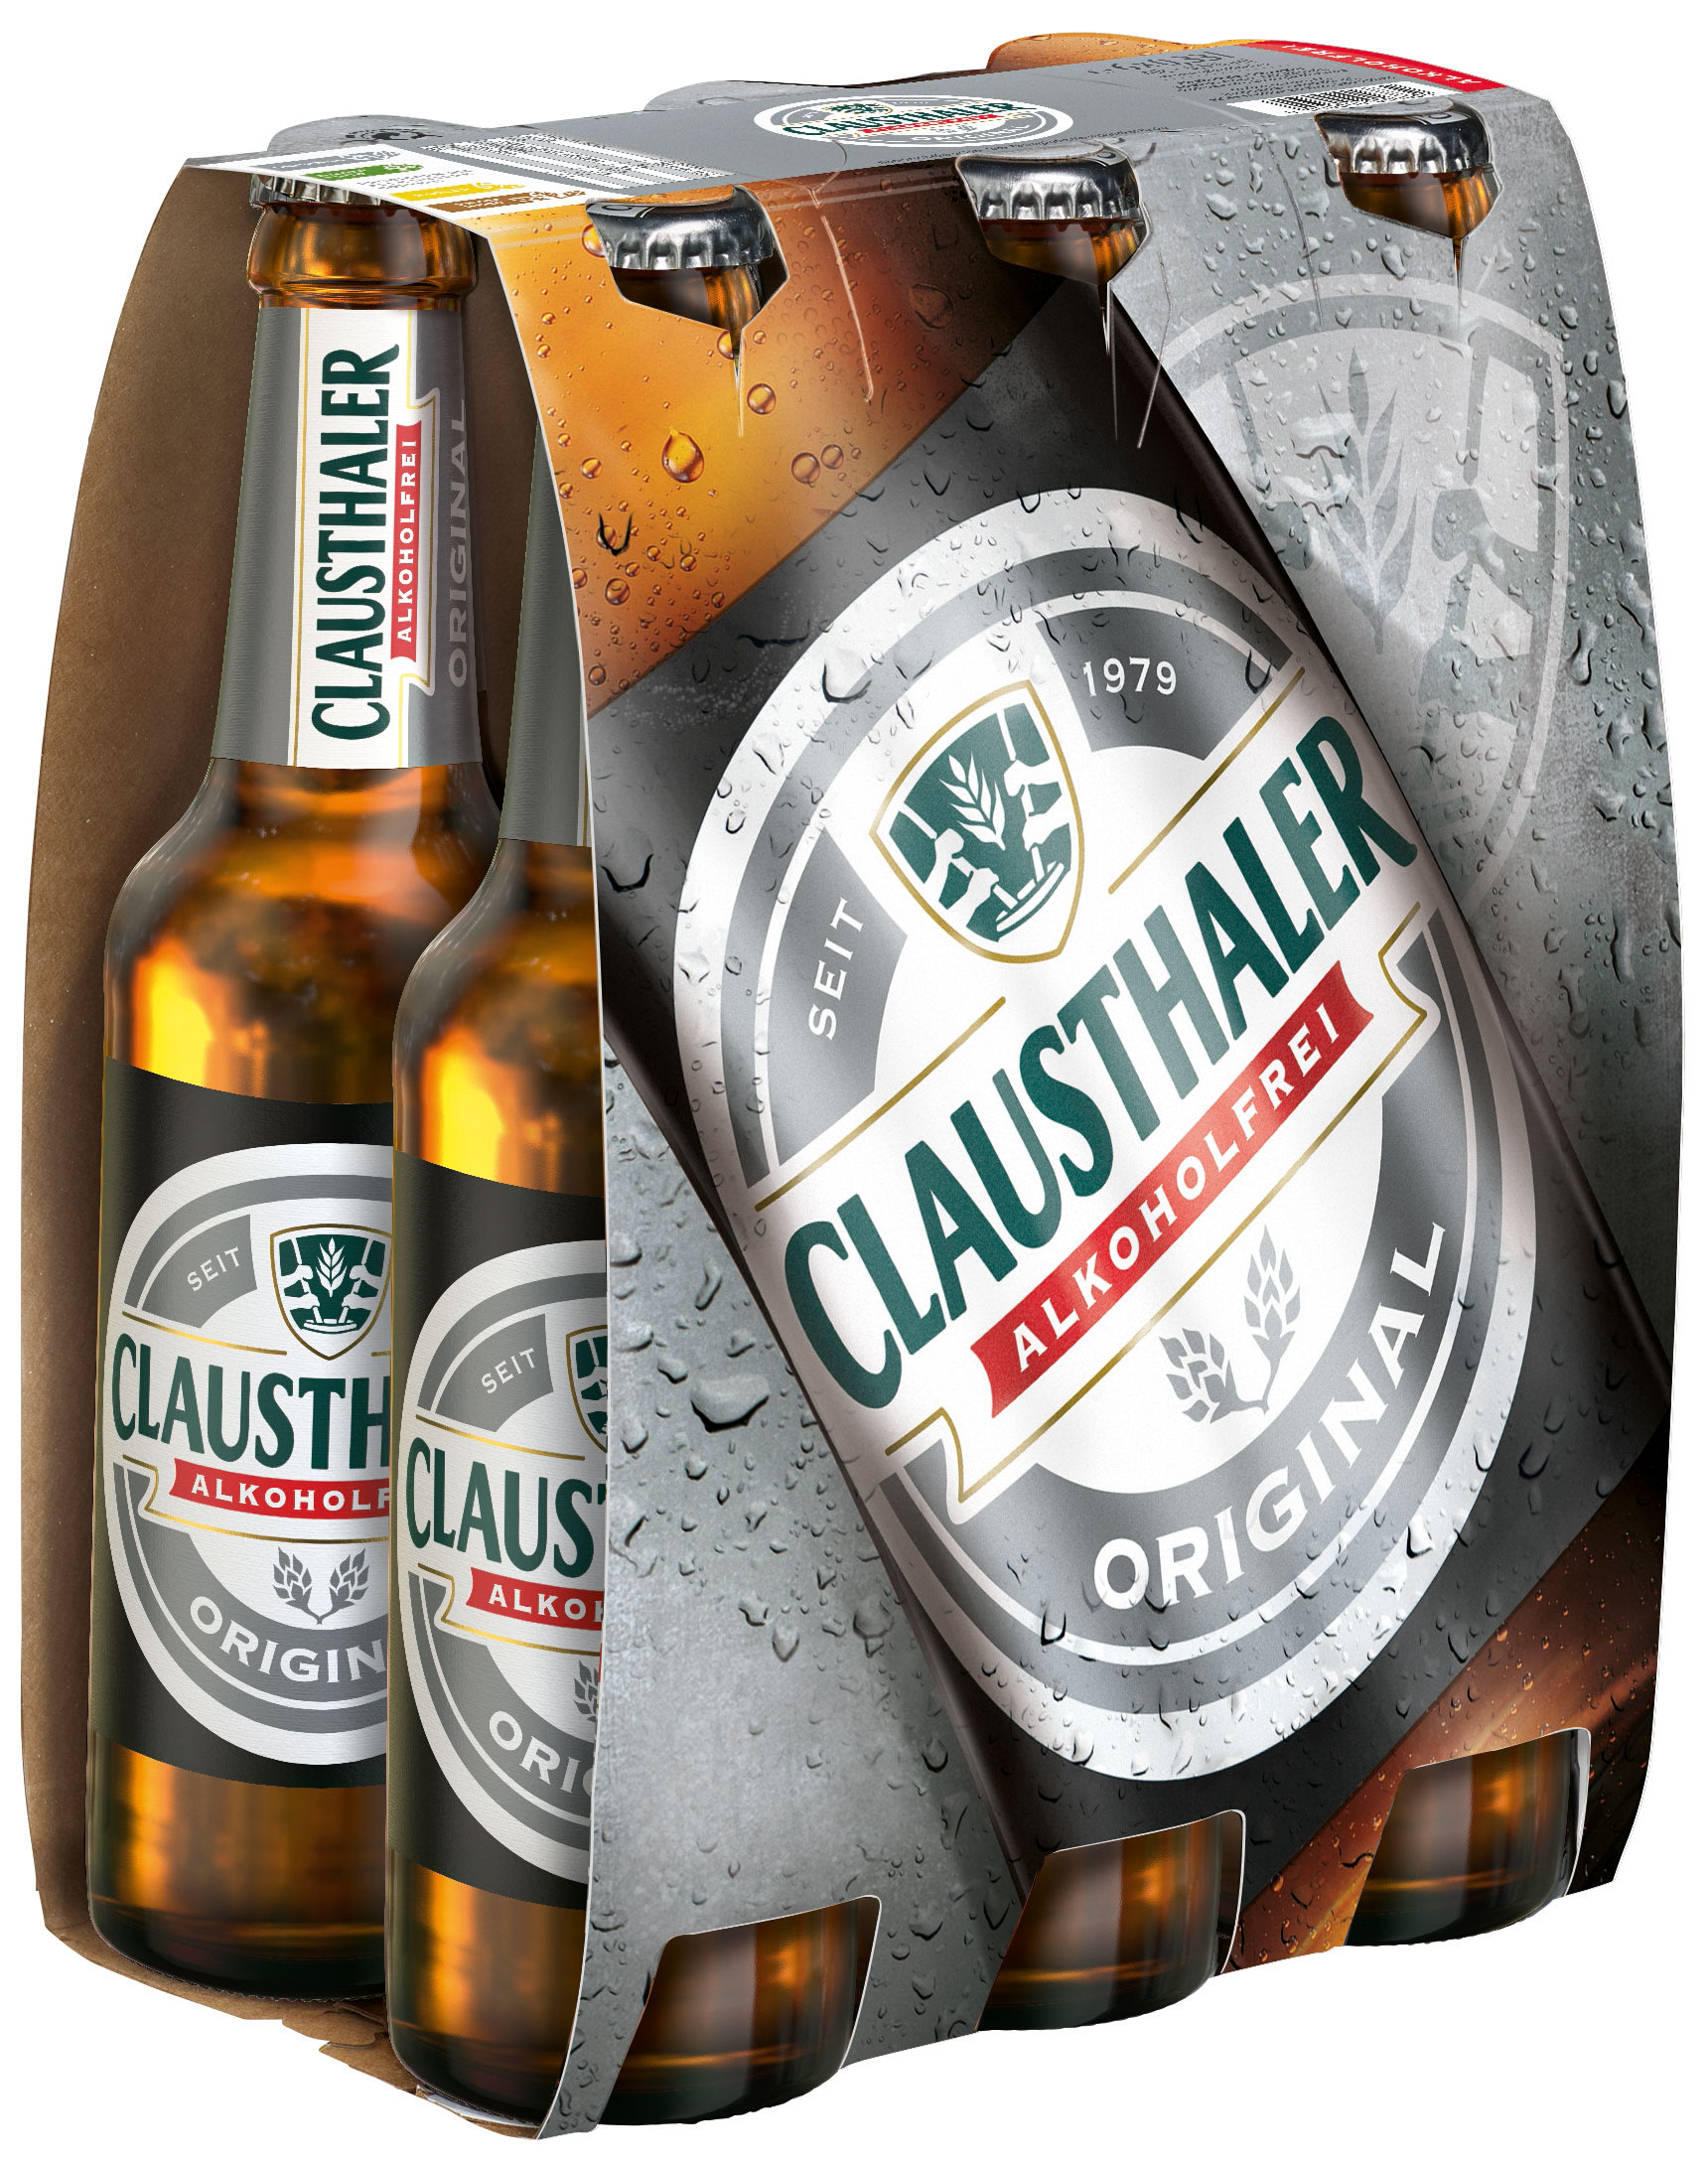 Clausthaler Classic alkoholfrei Kasten 4 x 6 x 0,33 l Glas Mehrweg